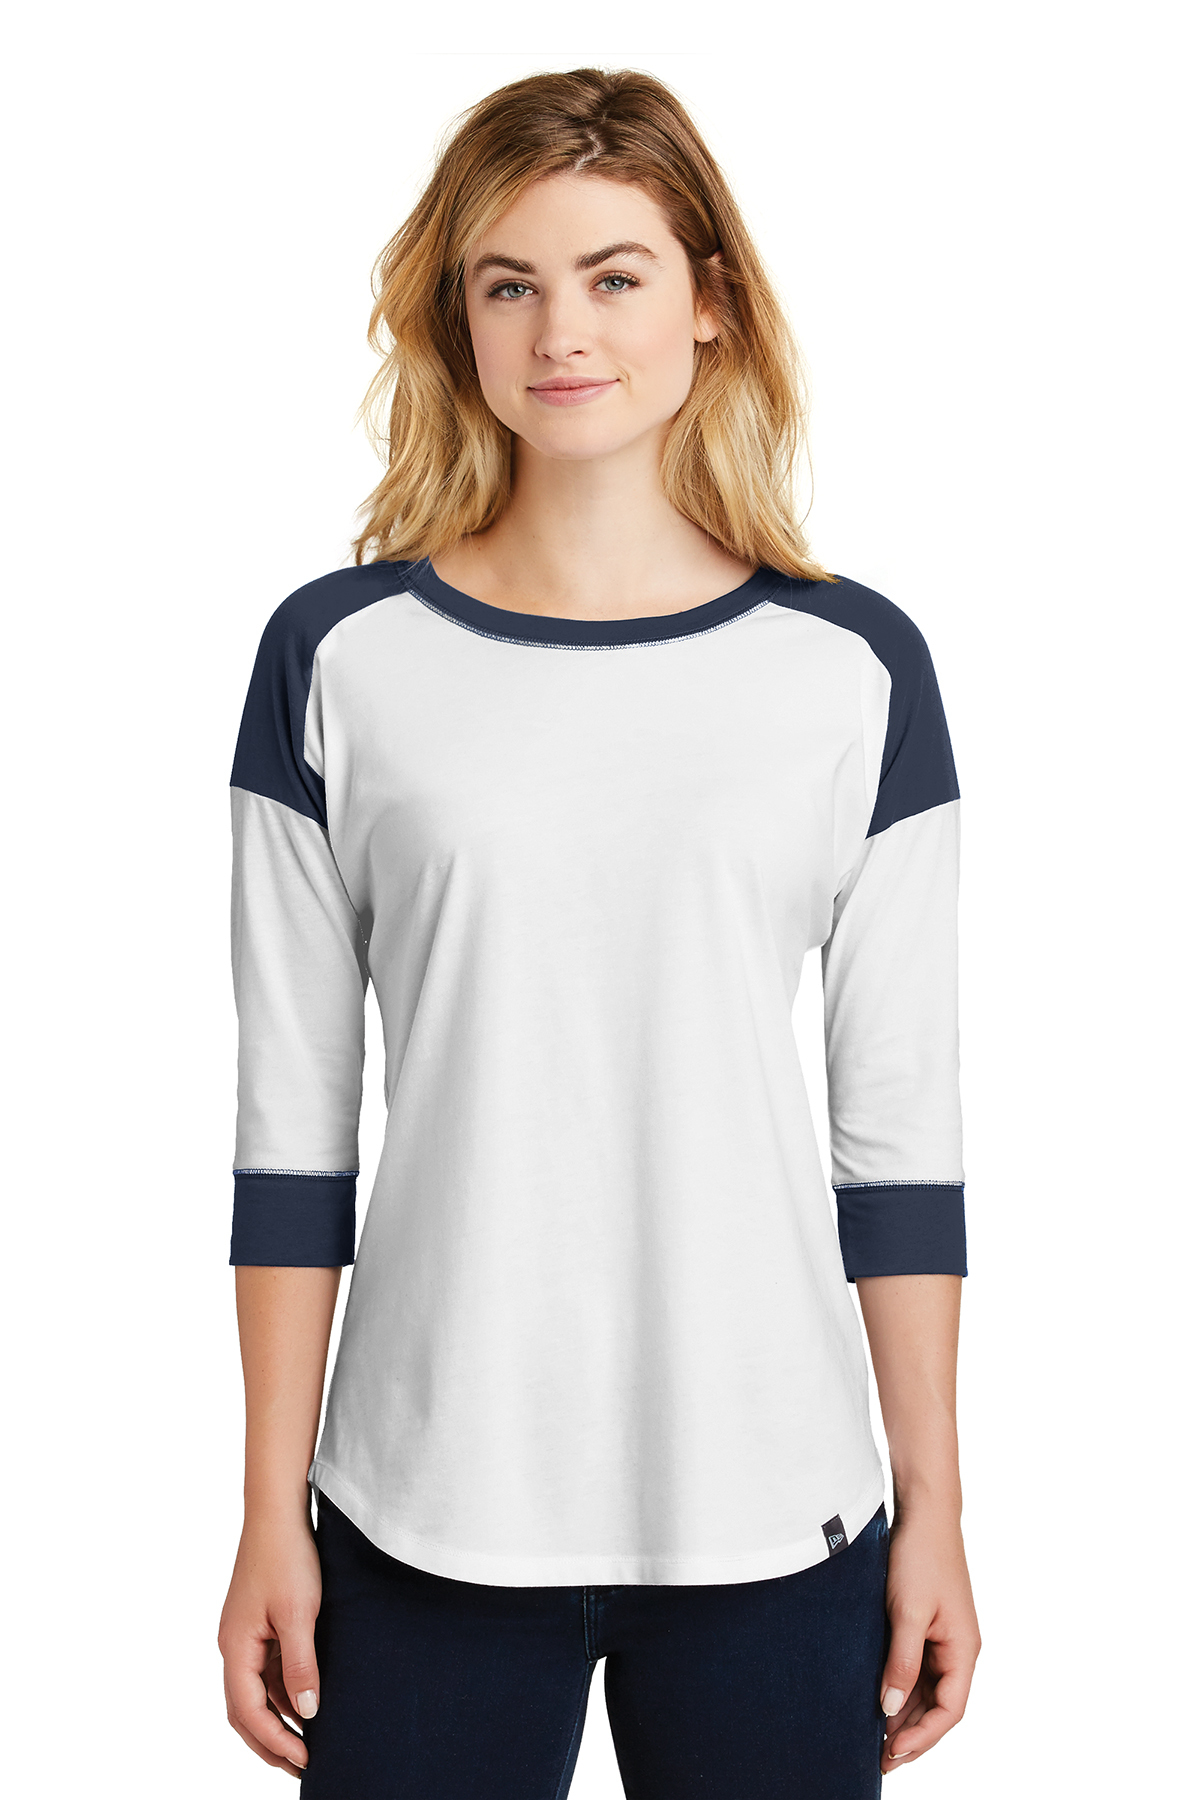 baseball shirts for women 3 4 sleeve